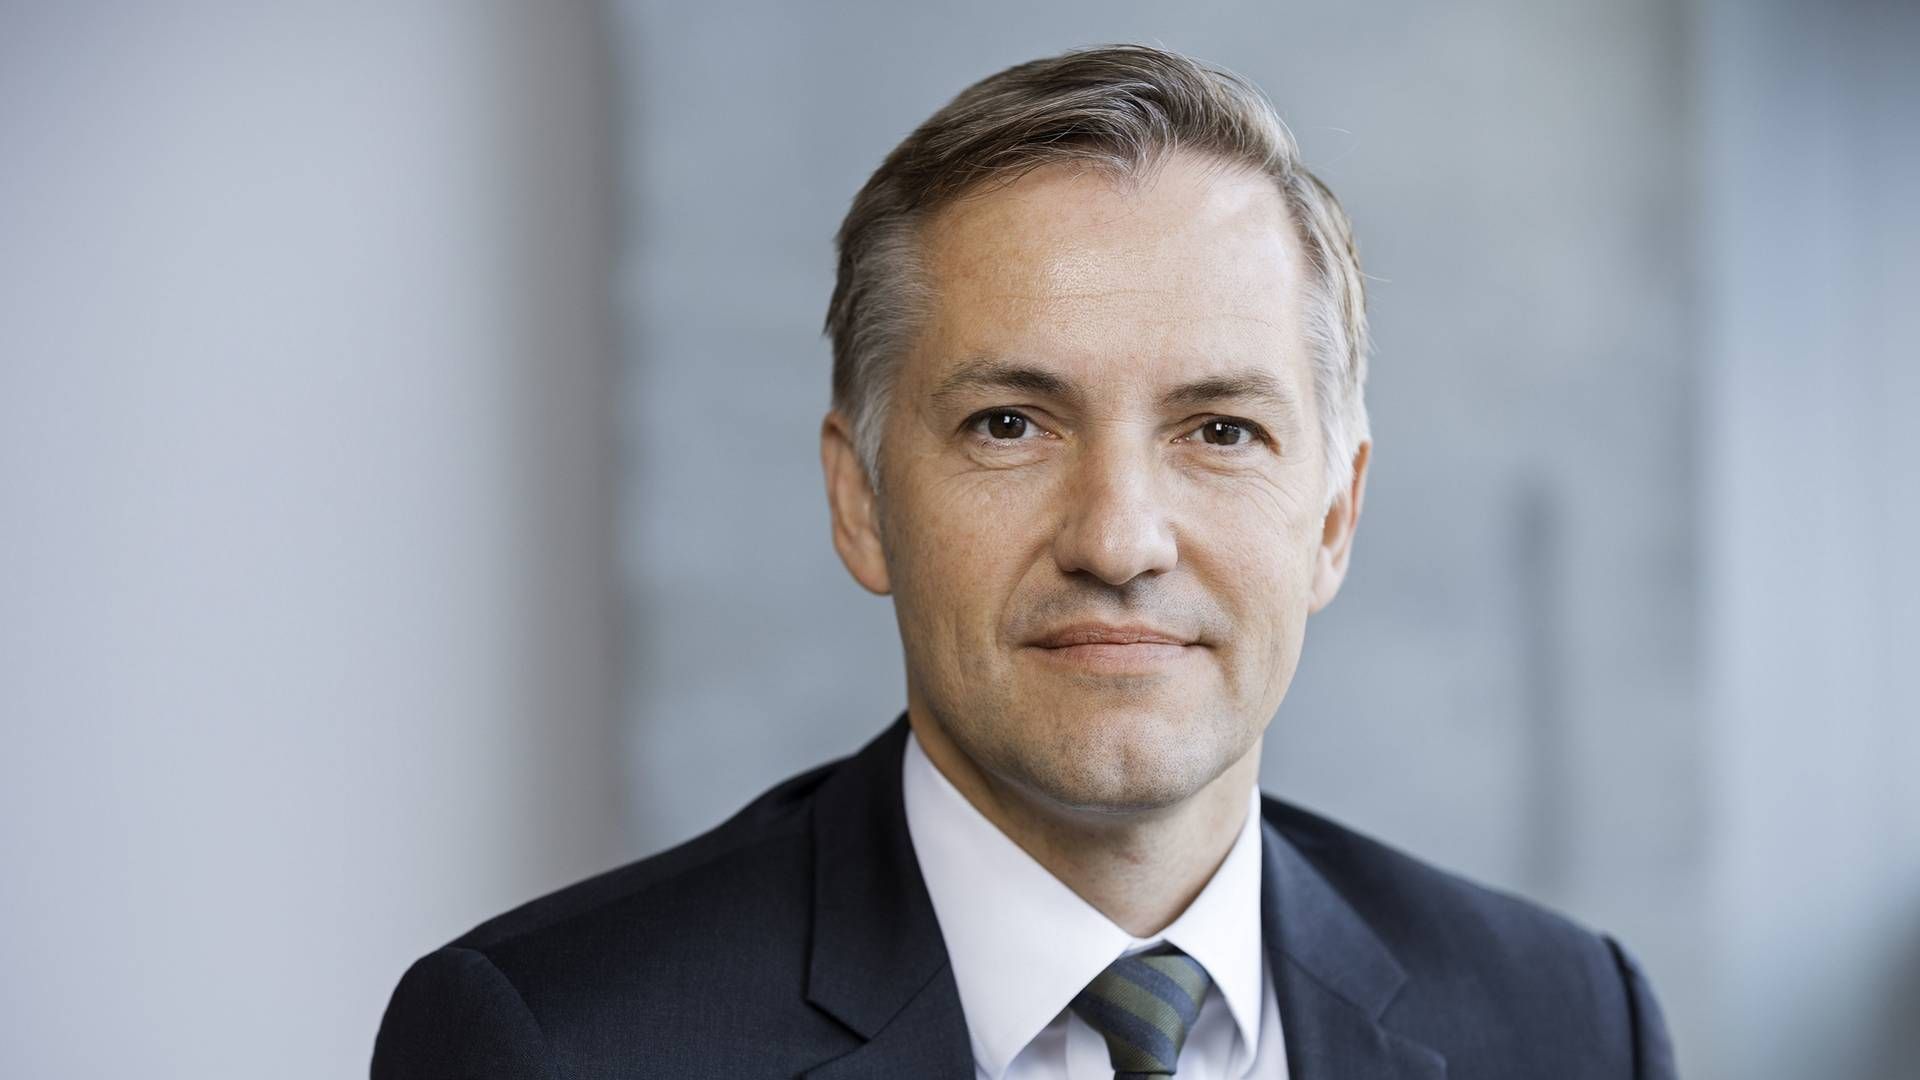 Jacob Tolstrup, executive vice president, Commercial Operations at Lundbeck | Photo: PR / Lundbeck